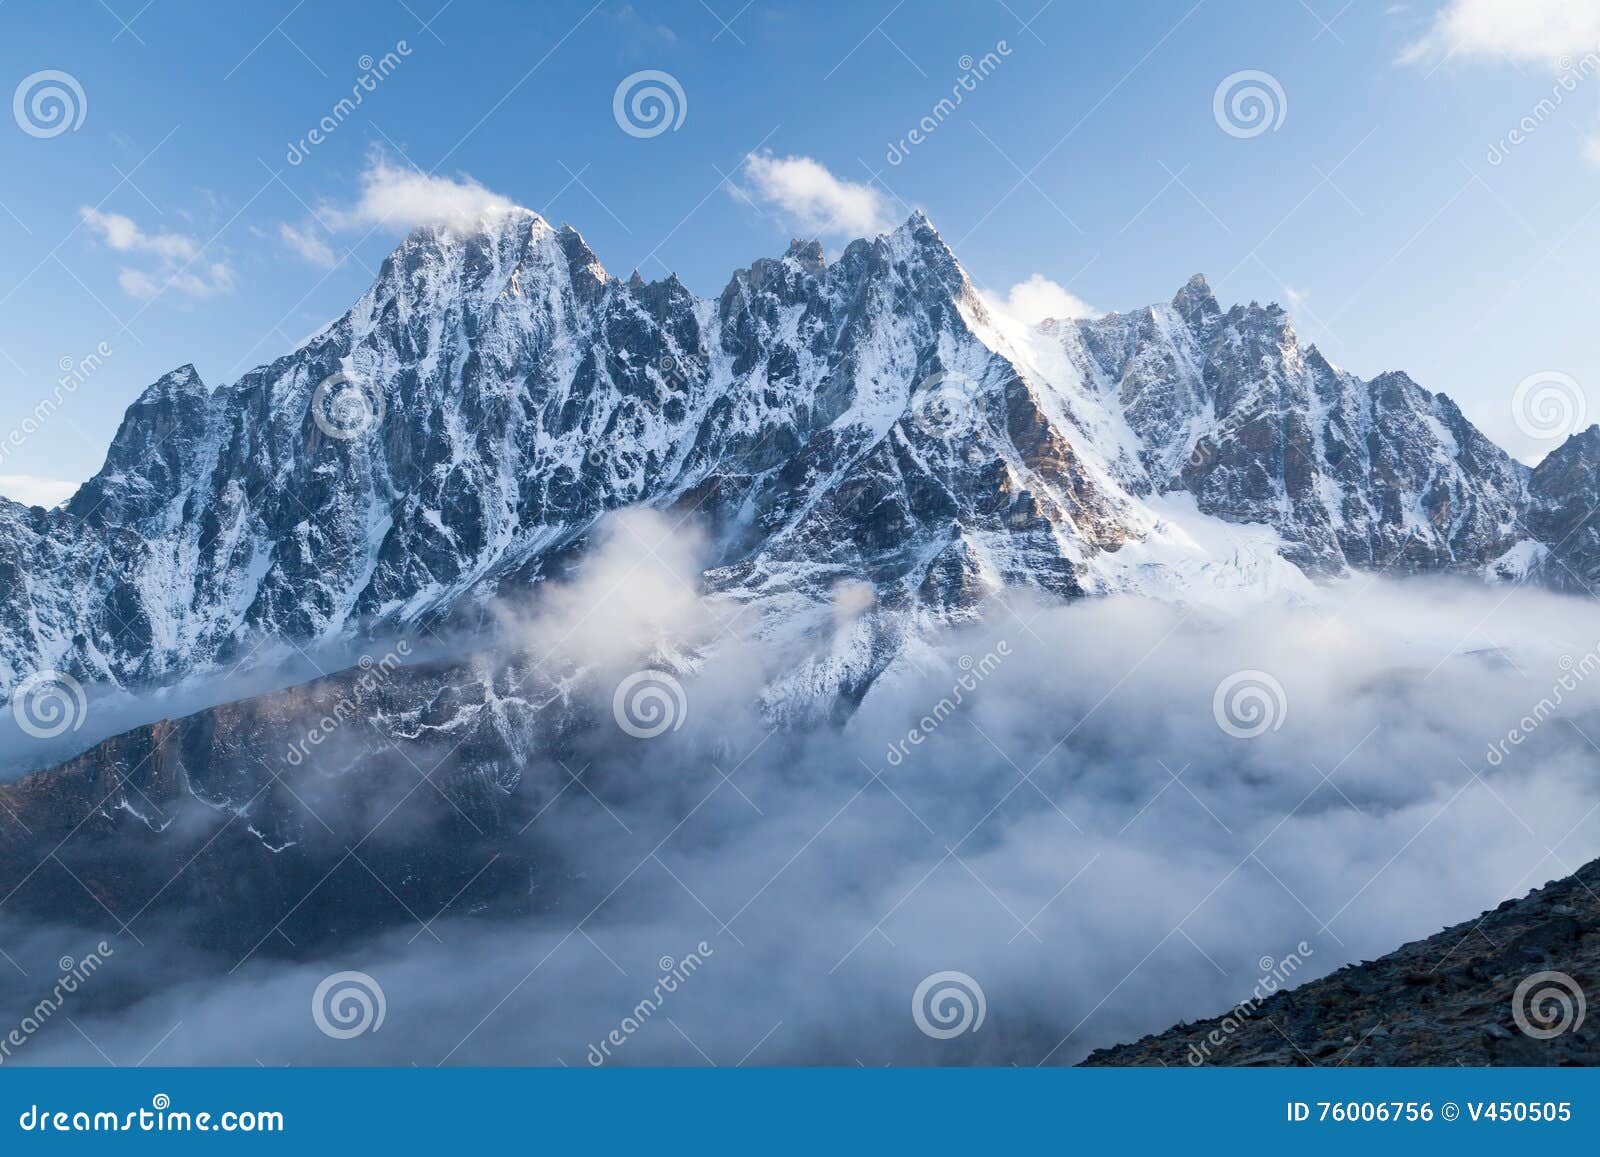 view of lobuche peak from kala patthar, solu khumbu, nepal